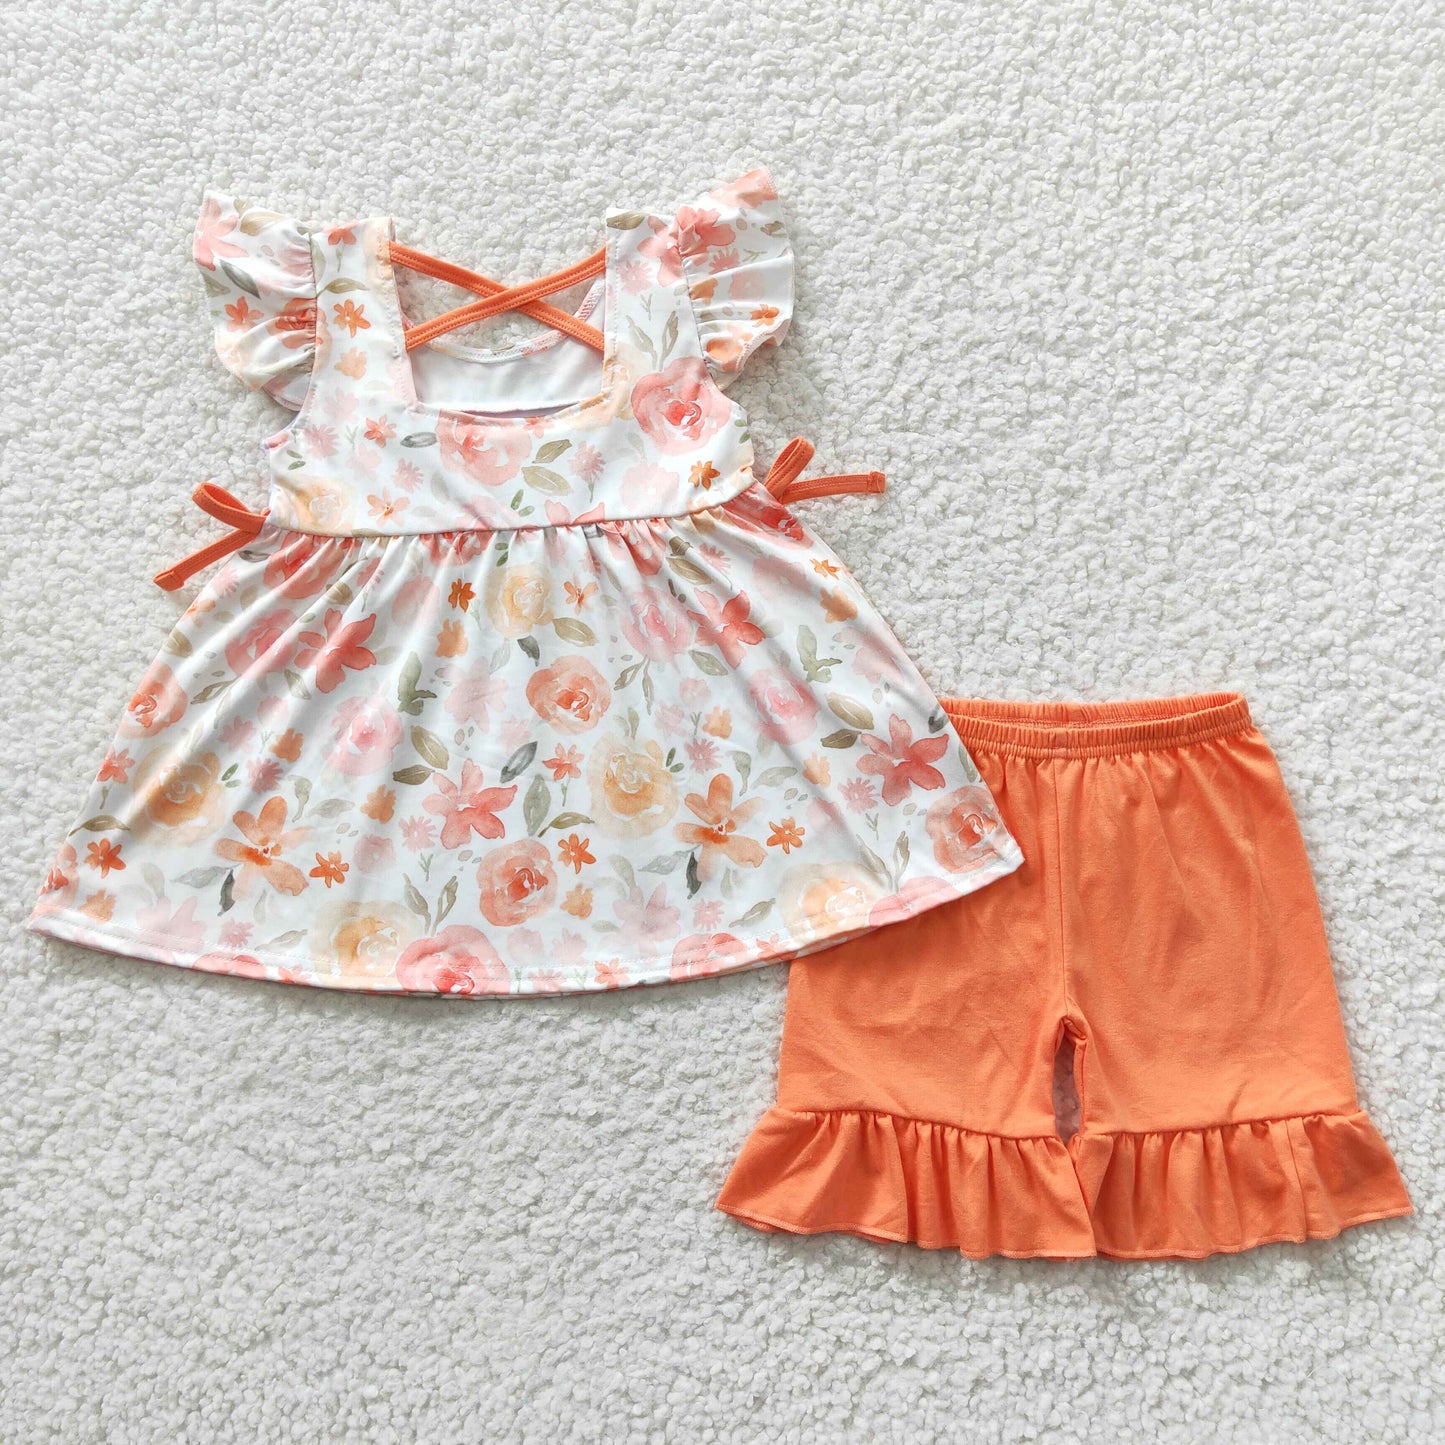 mama’s girl orange floral embroidery ruffle shorts set girl